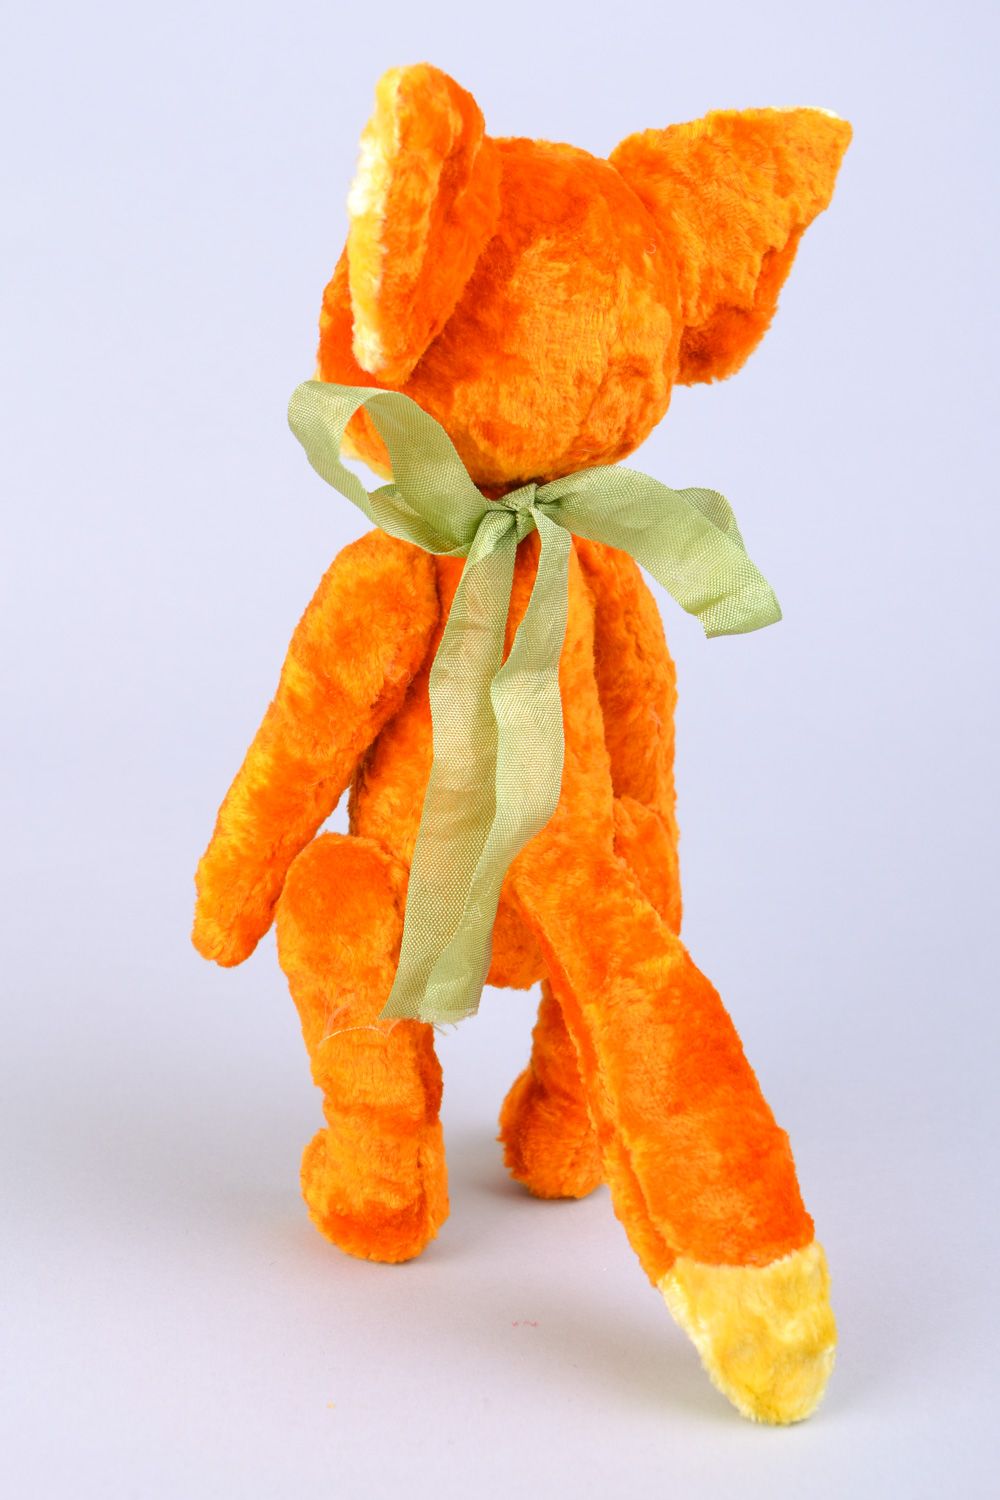 Petite peluche décorative orange faite main originale cadeau Renardeau photo 5